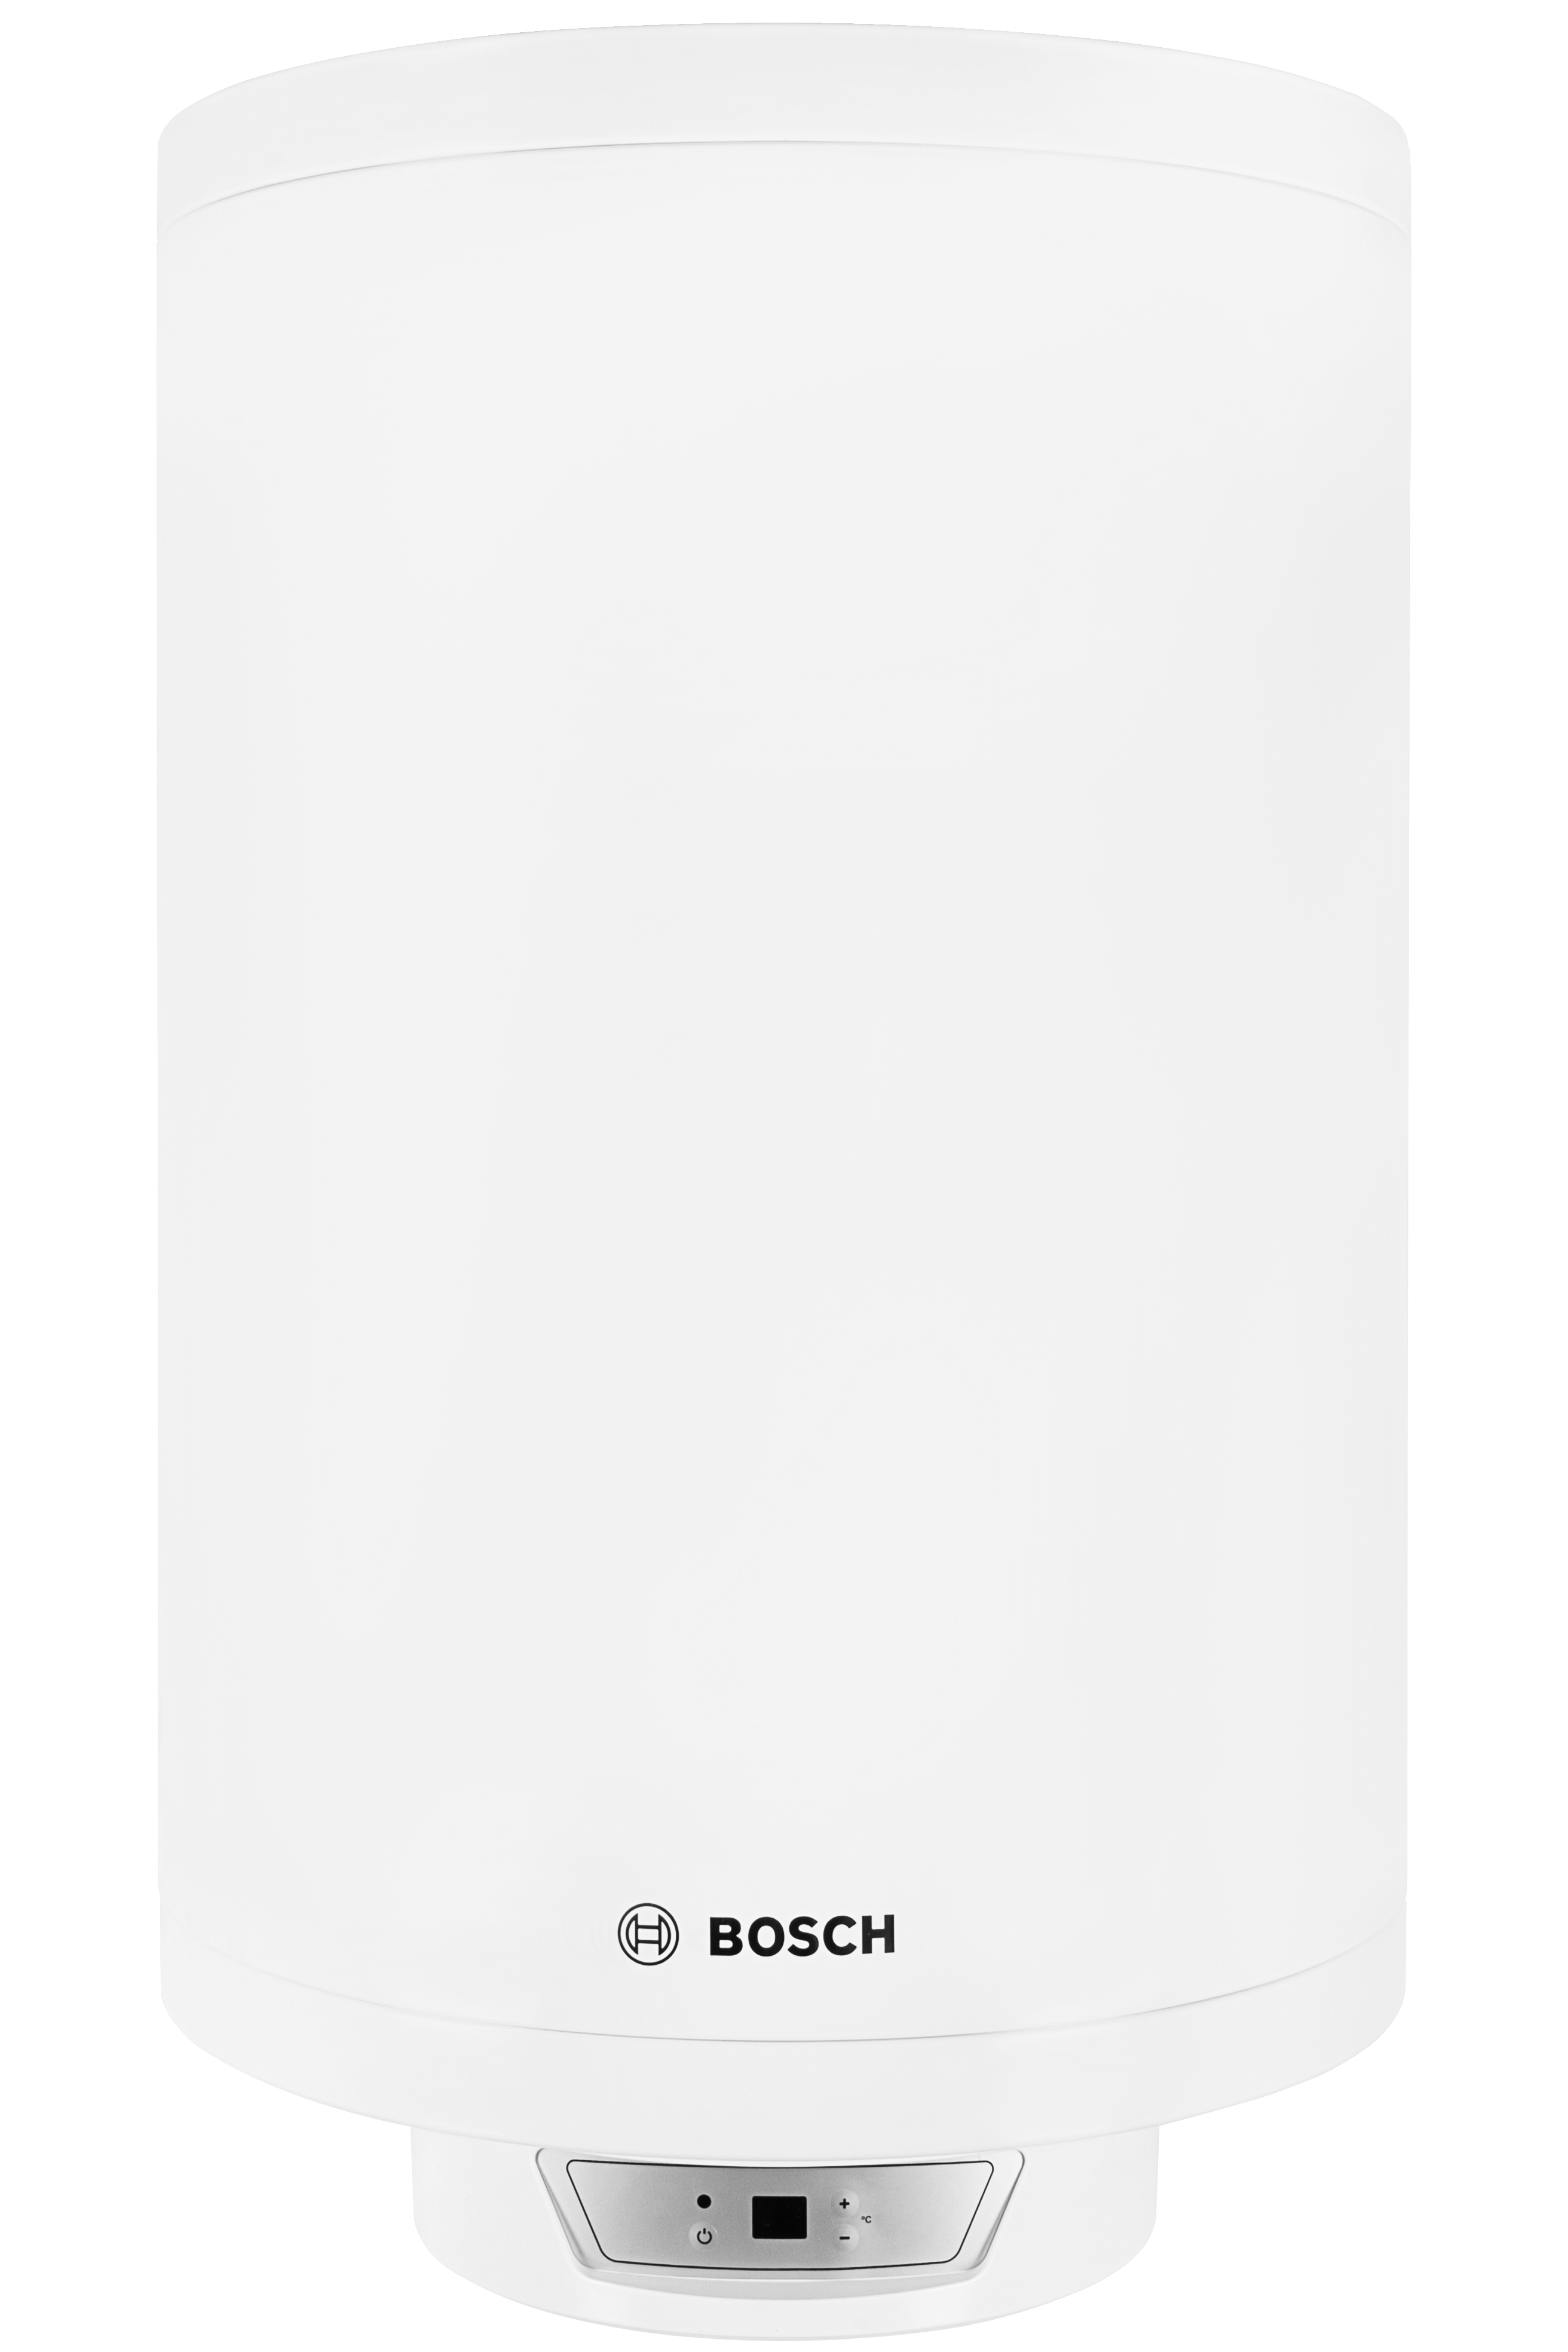 Бойлер Bosch Tronic 8000T ES 080-5 2000W BO H1X-EDWRB (7736503147) в интернет-магазине, главное фото